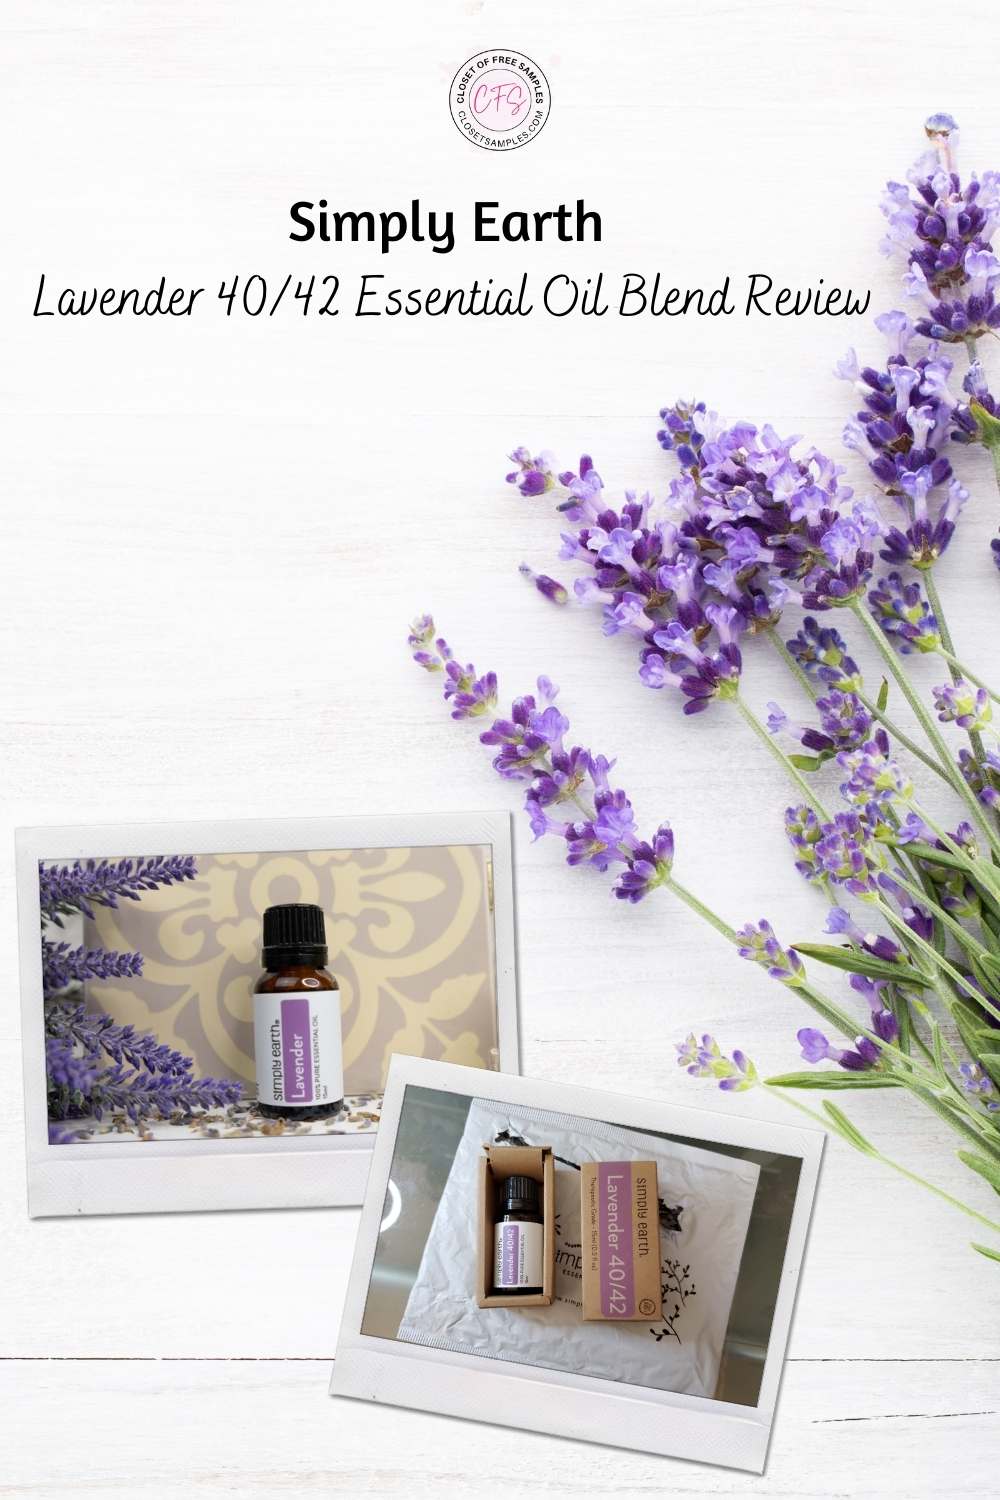 Simply-Earth-Lavender-4042-Essential-Oil-Blend-Review-closetsamples-Pinterest.jpg